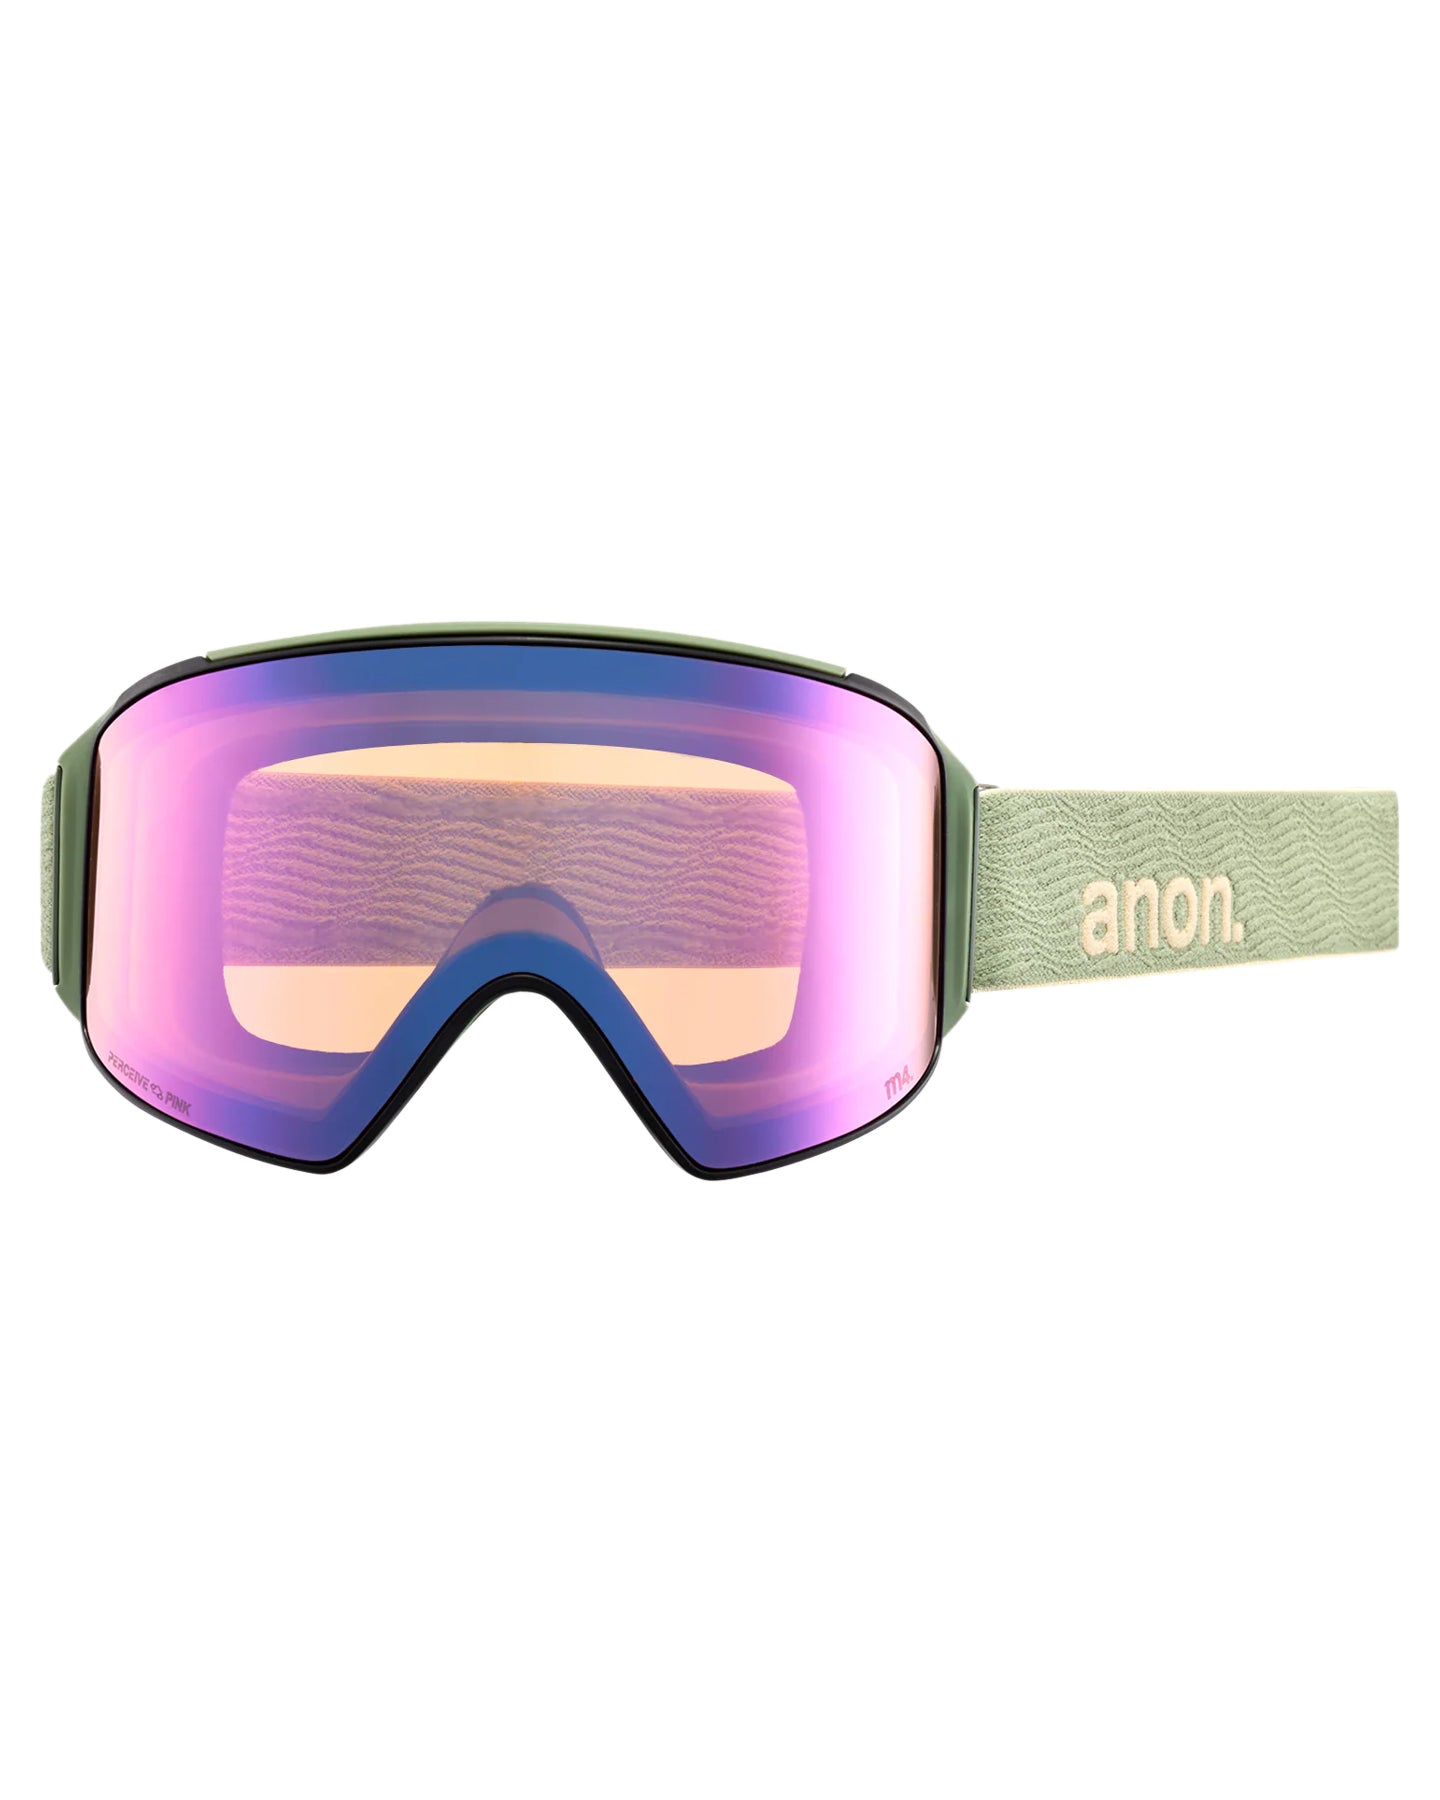 Anon M4 Cylindrical Snow Goggles + Bonus Lens + Mfi® Face Mask - Hedge/Perceive Variable Green Lens Men's Snow Goggles - Trojan Wake Ski Snow